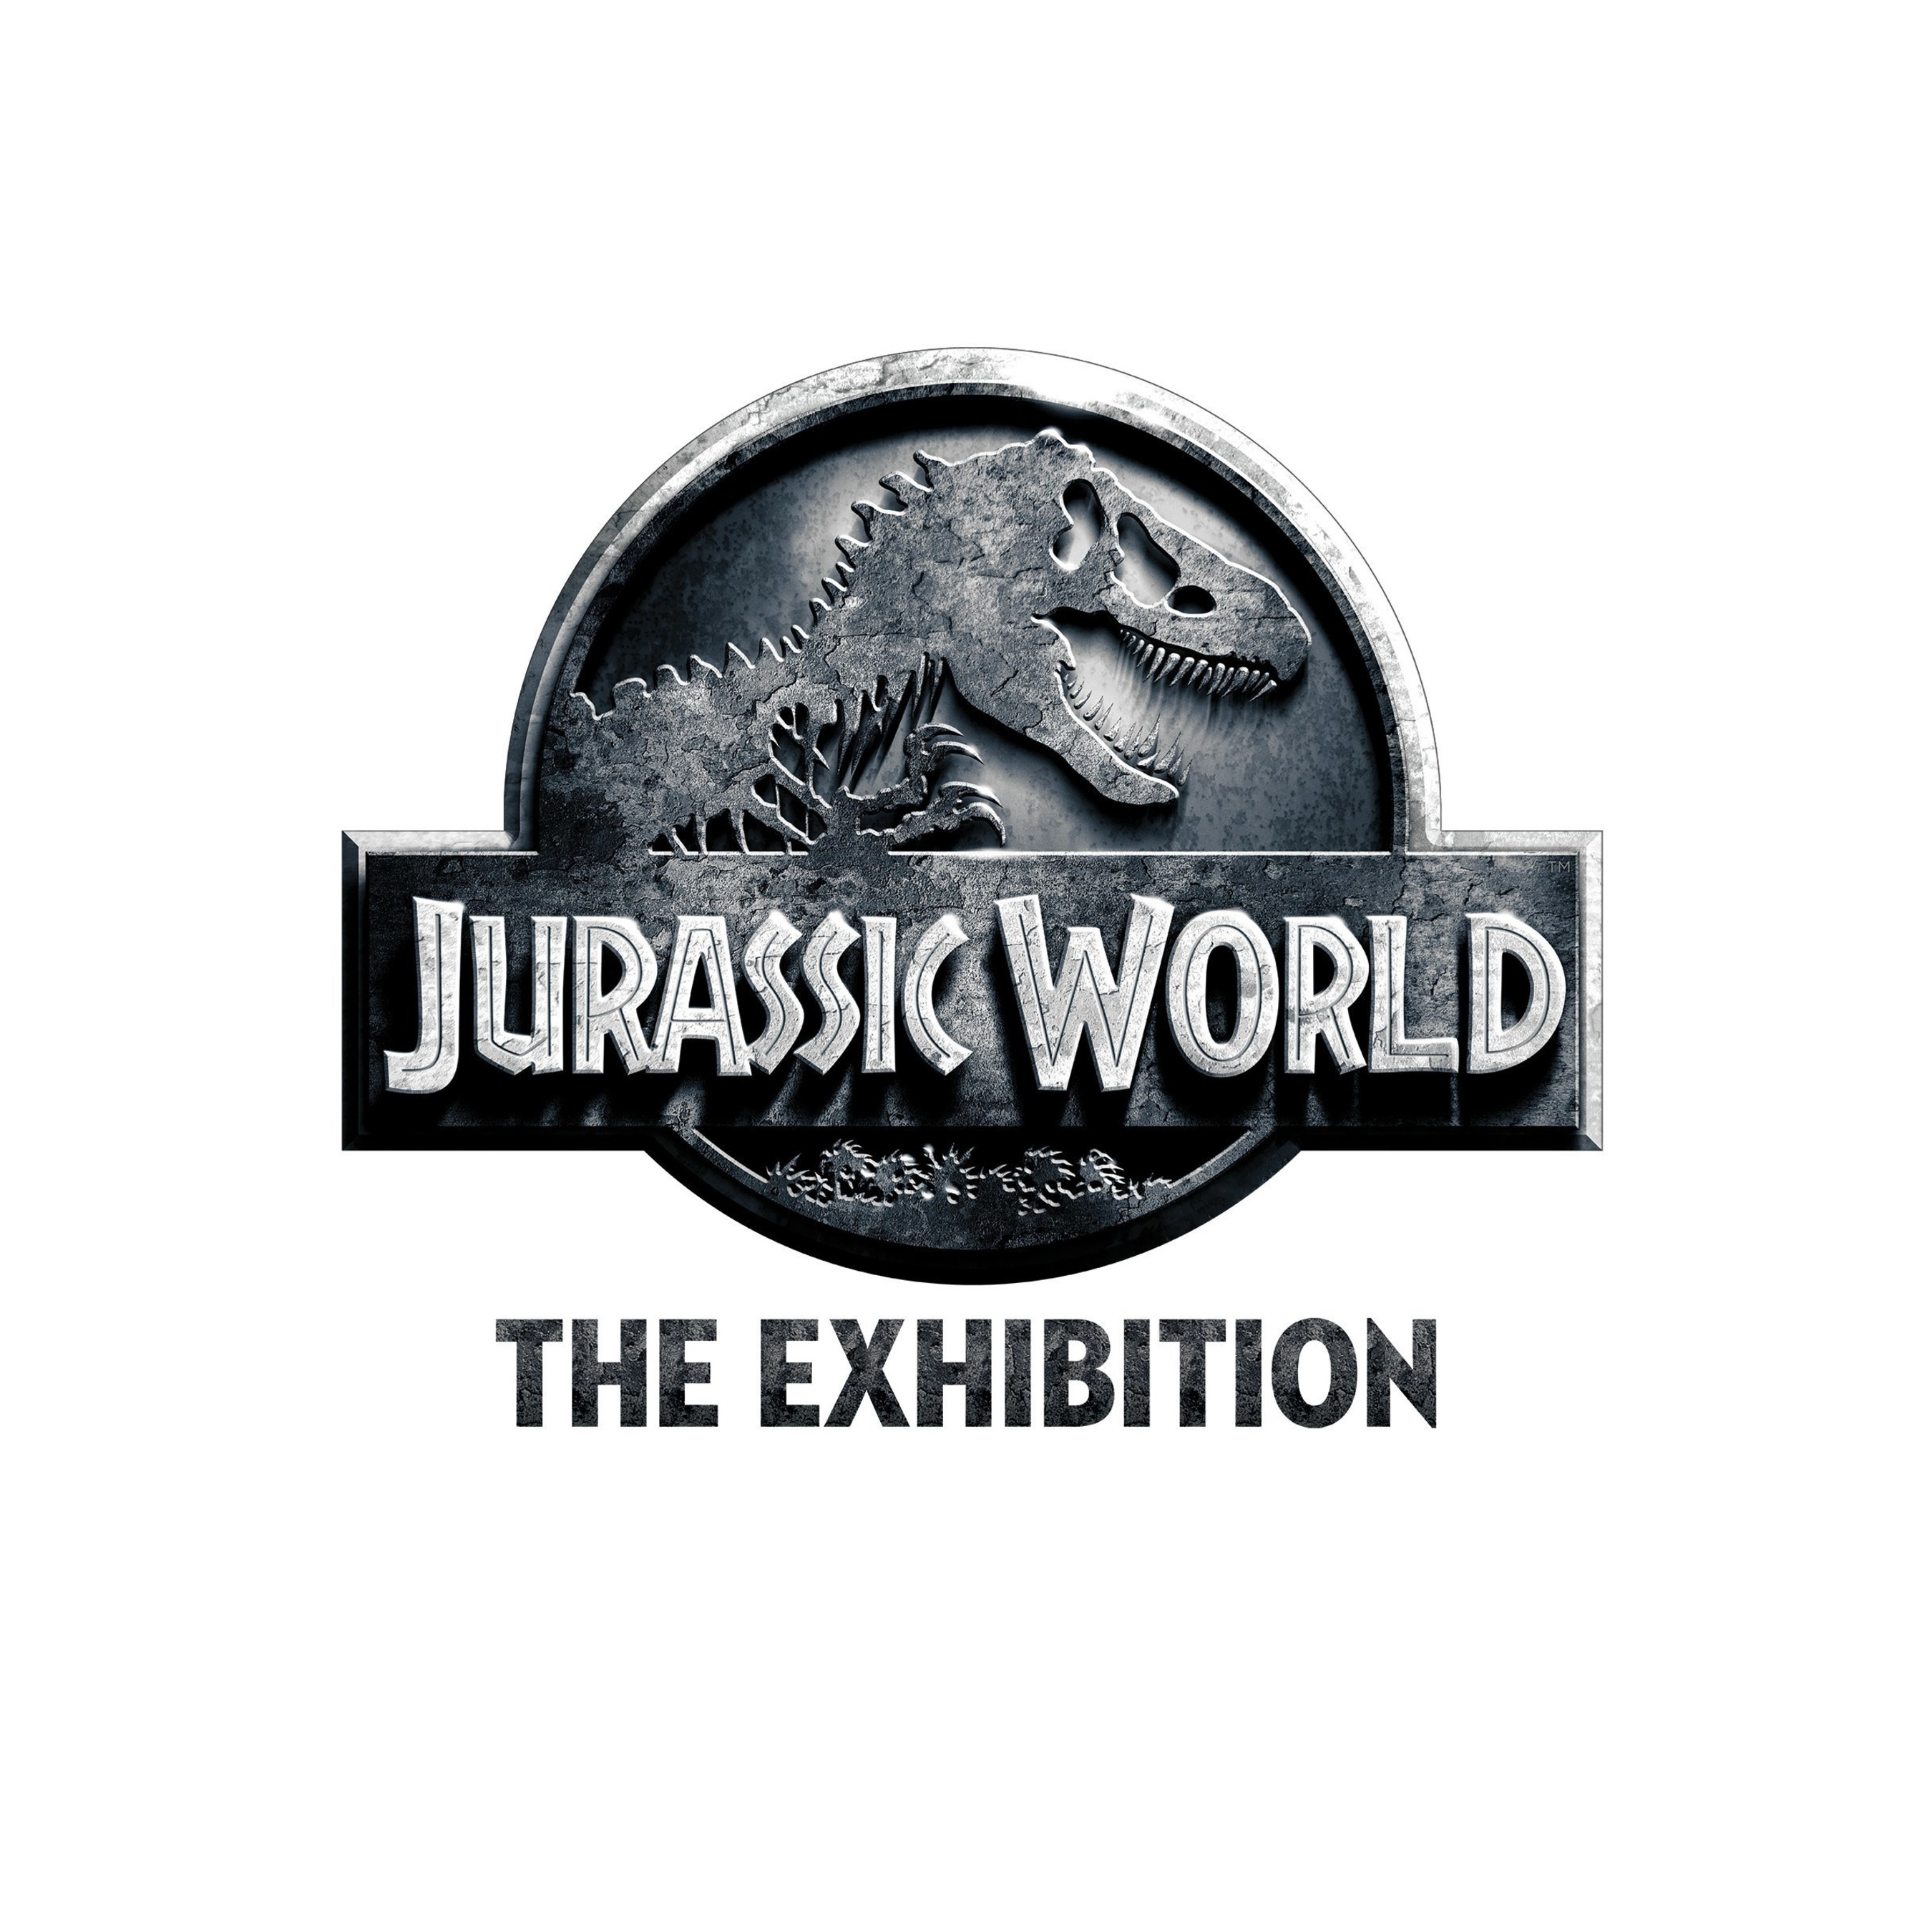 Jurassic World: The Exhibition opens November 25, 2016, at The Franklin Institute in Philadelphia